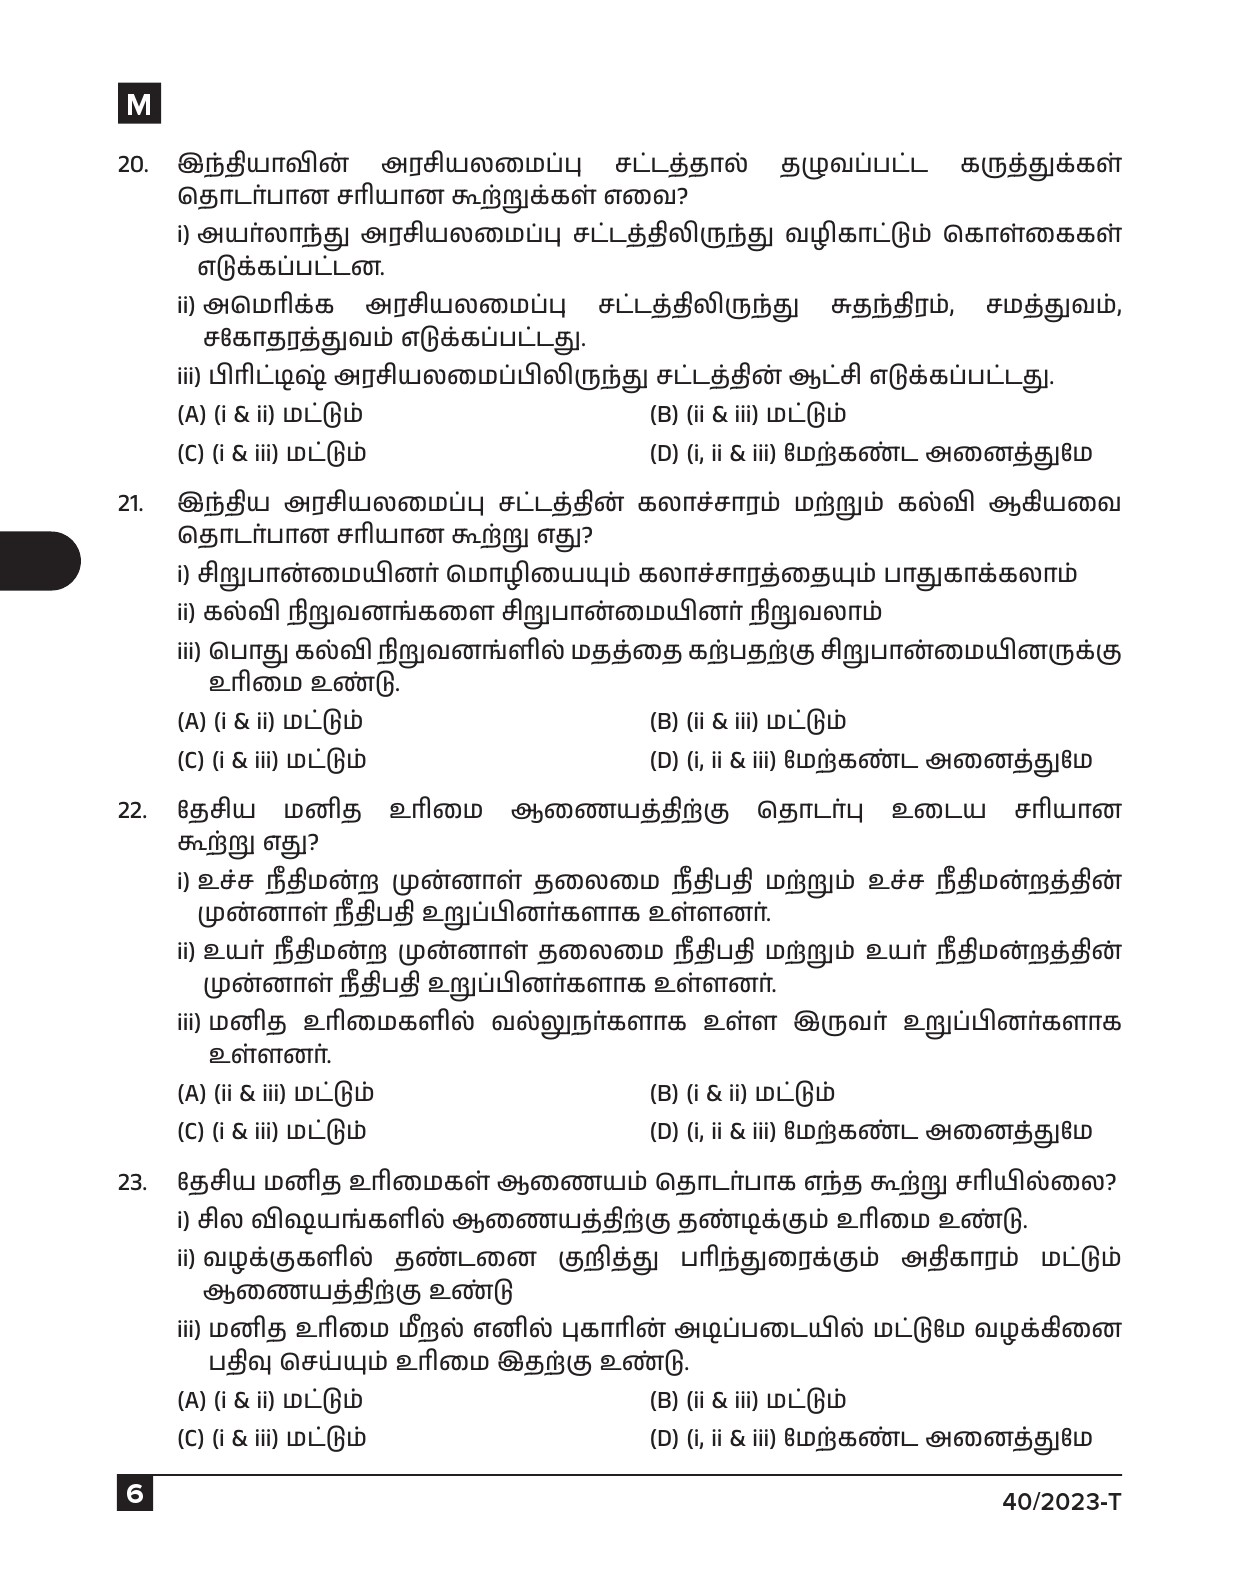 KPSC Data Entry Operator Tamil Exam 2023 Code 0402023 T 5